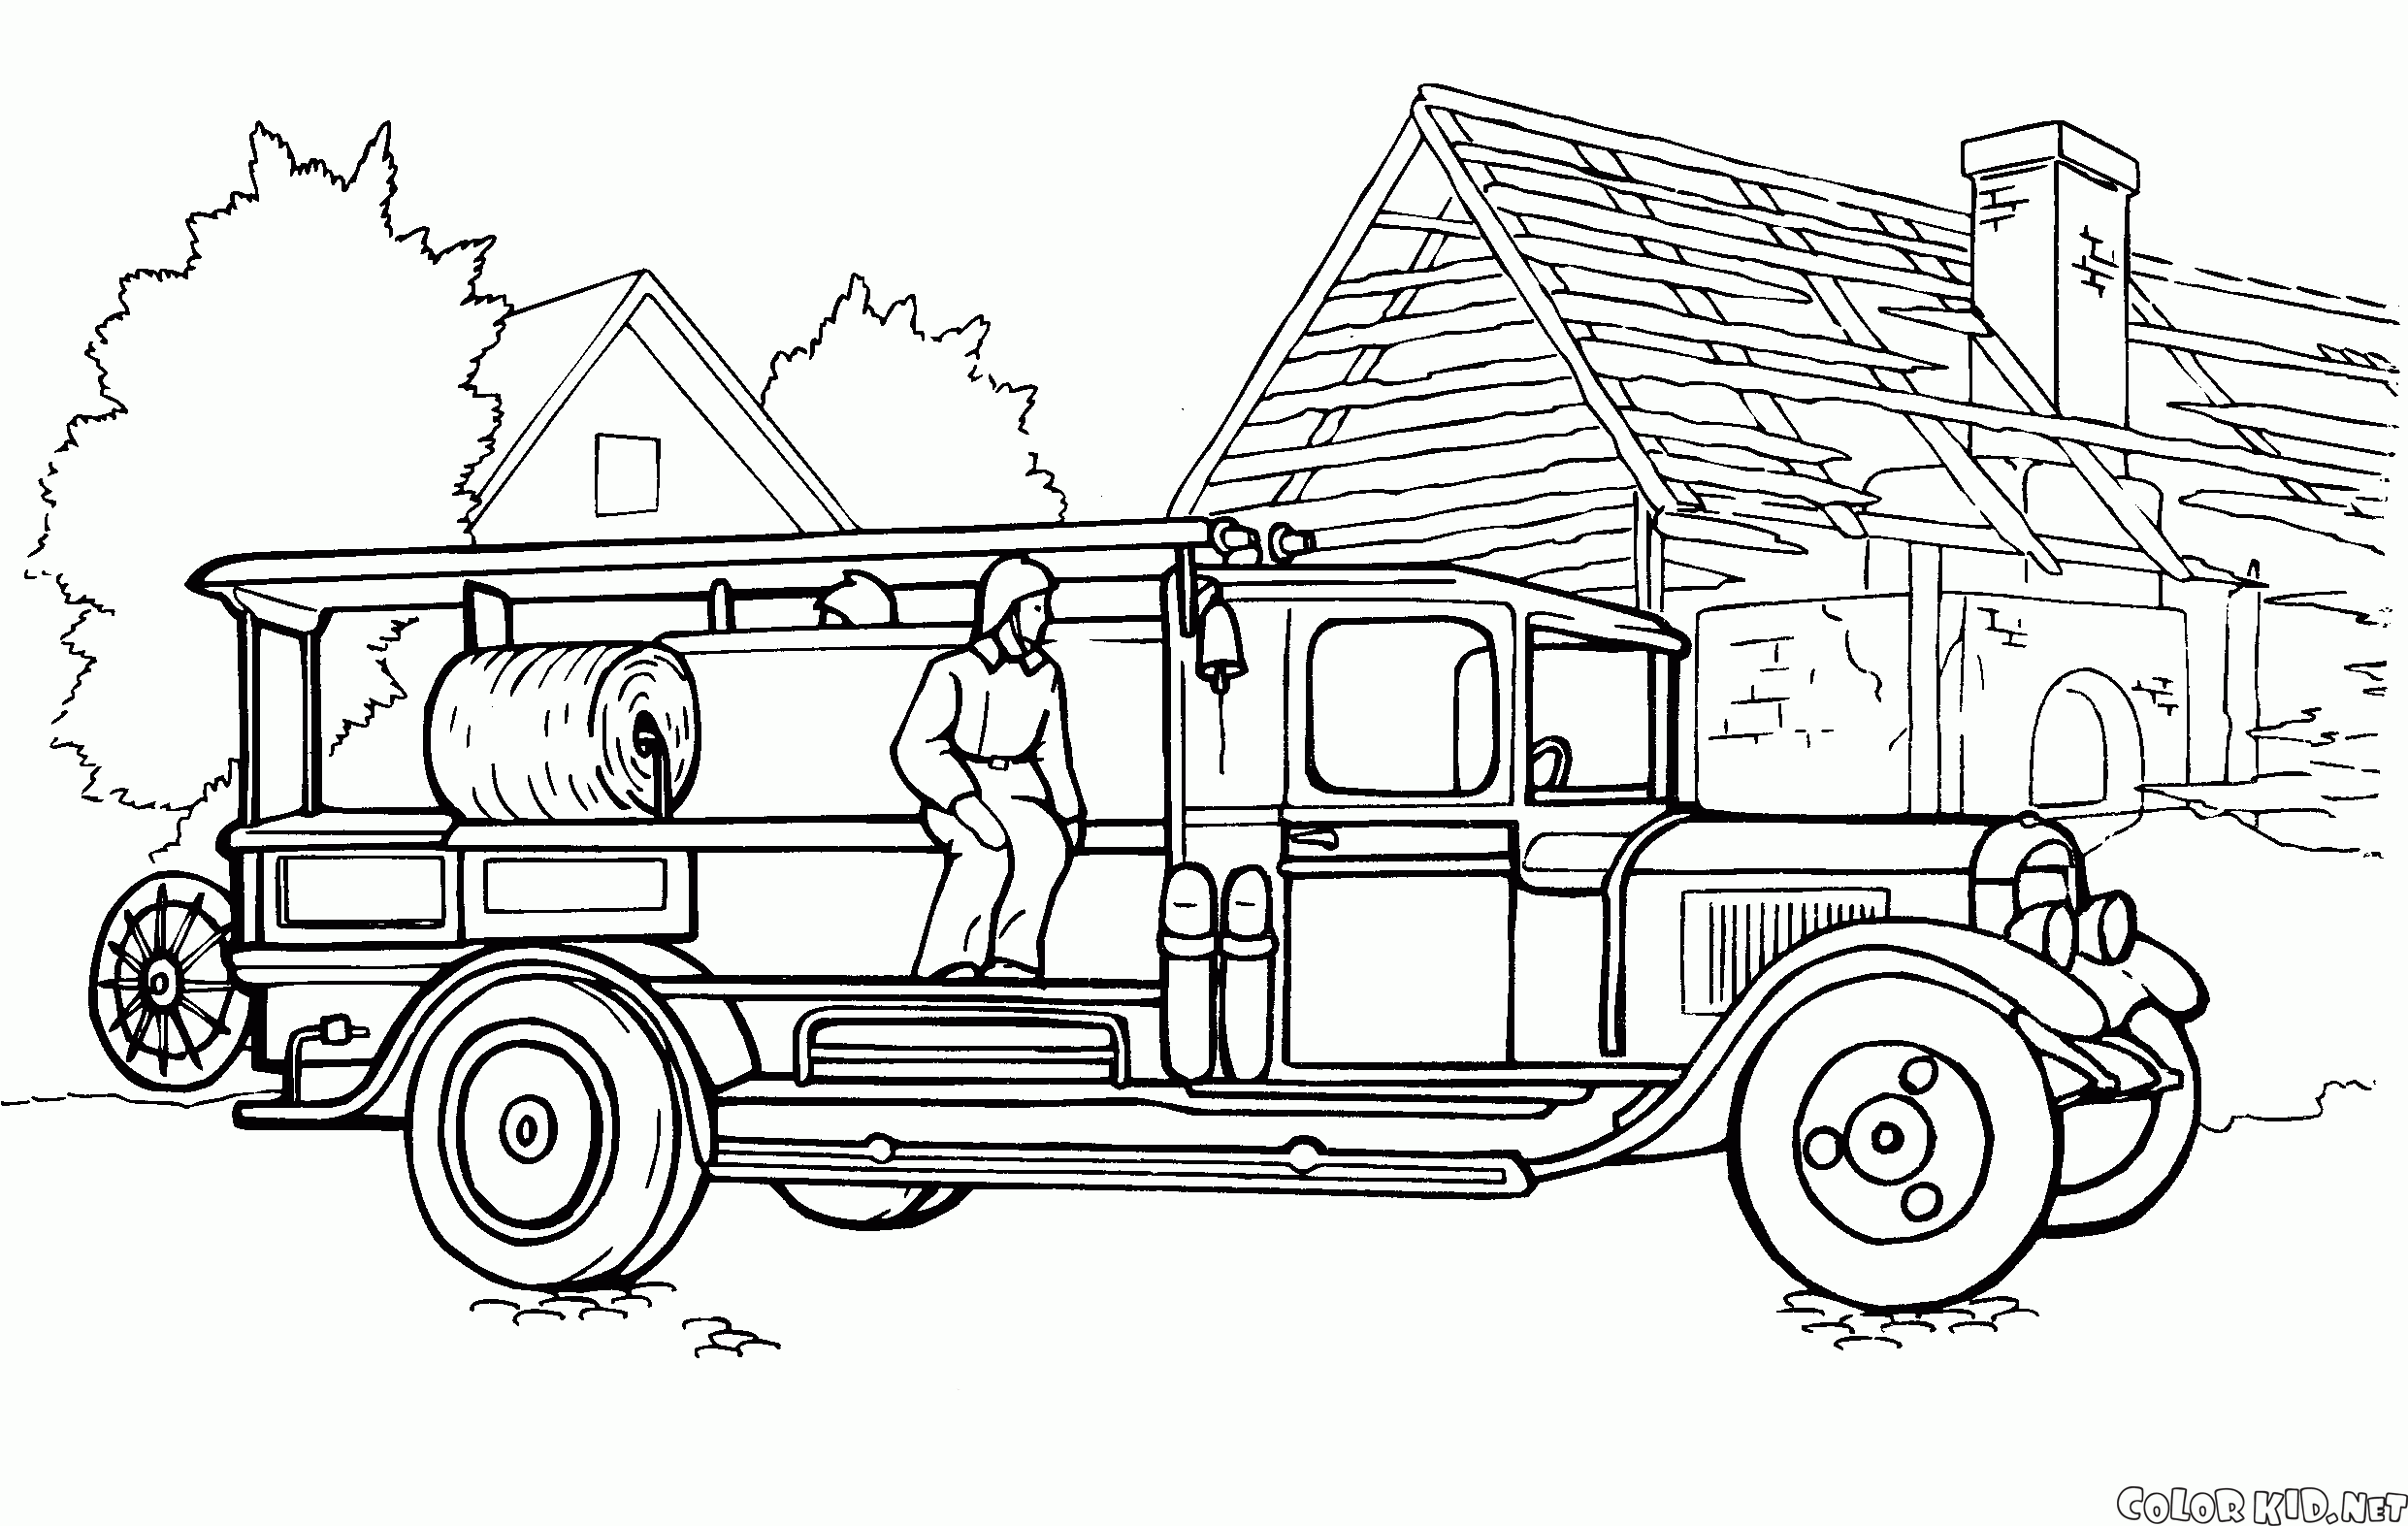 Fire Engine 19, but century